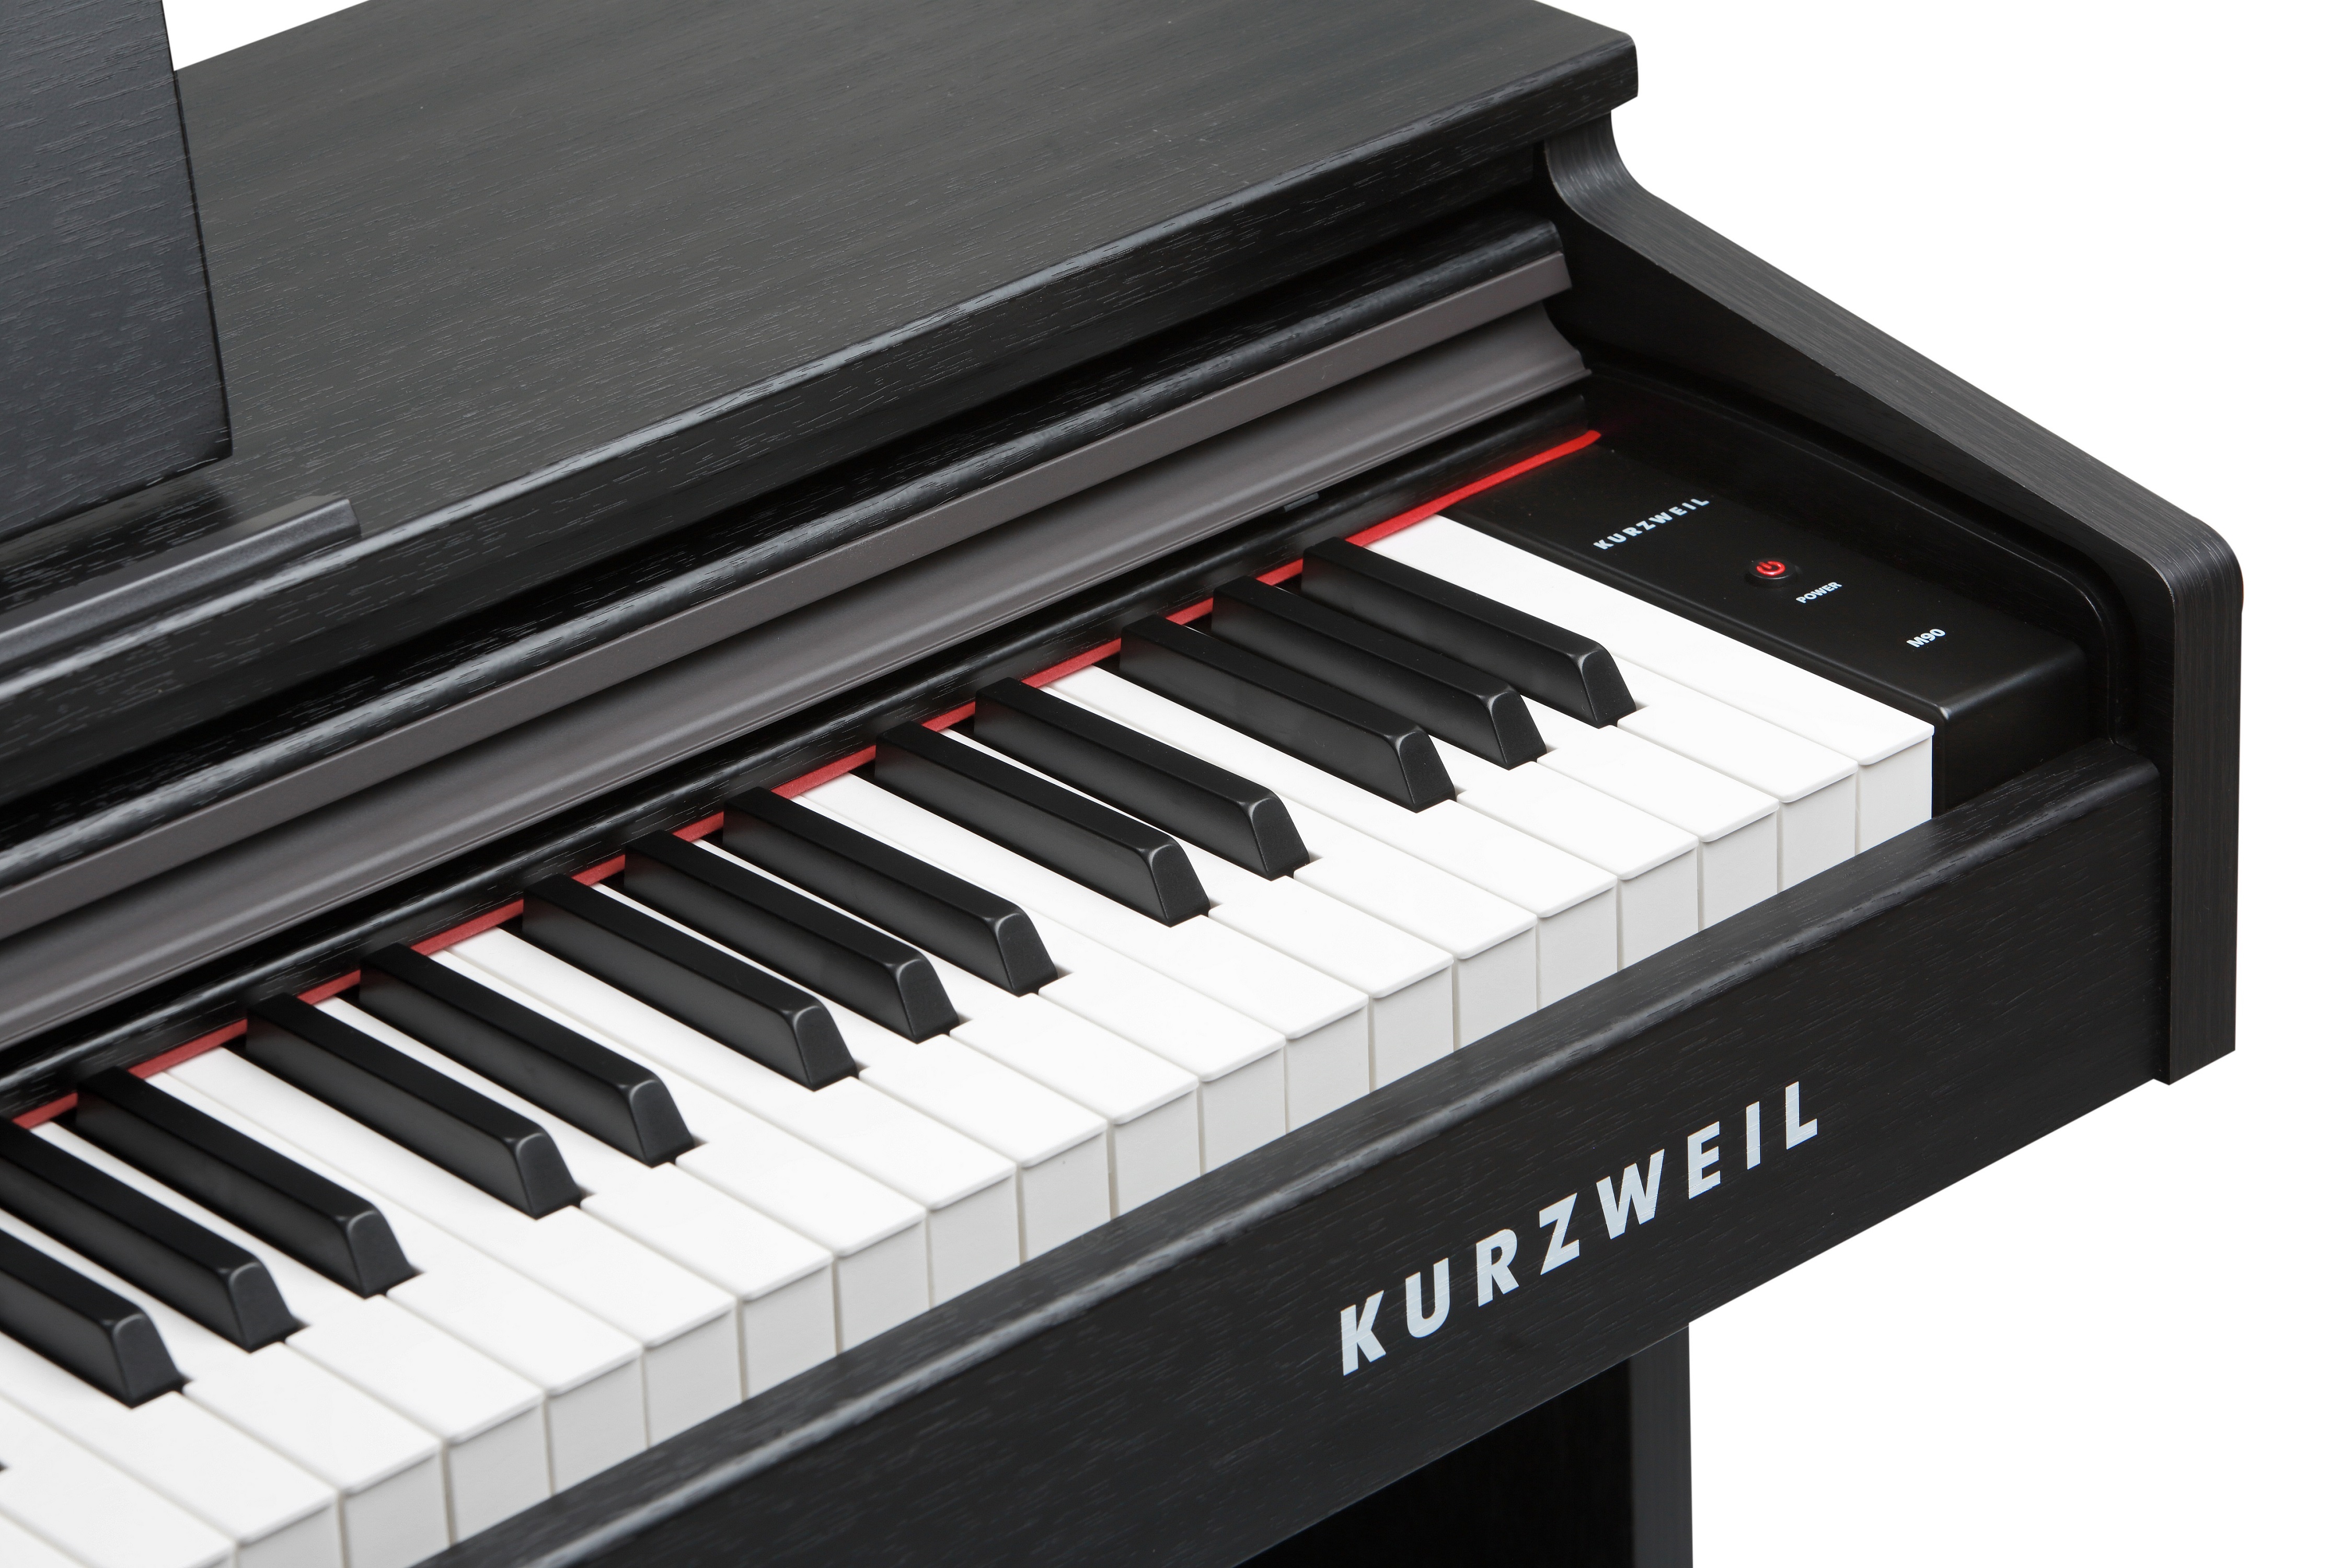 Kurzweil M-90 SR цифровое пианино. Цвет палисандр